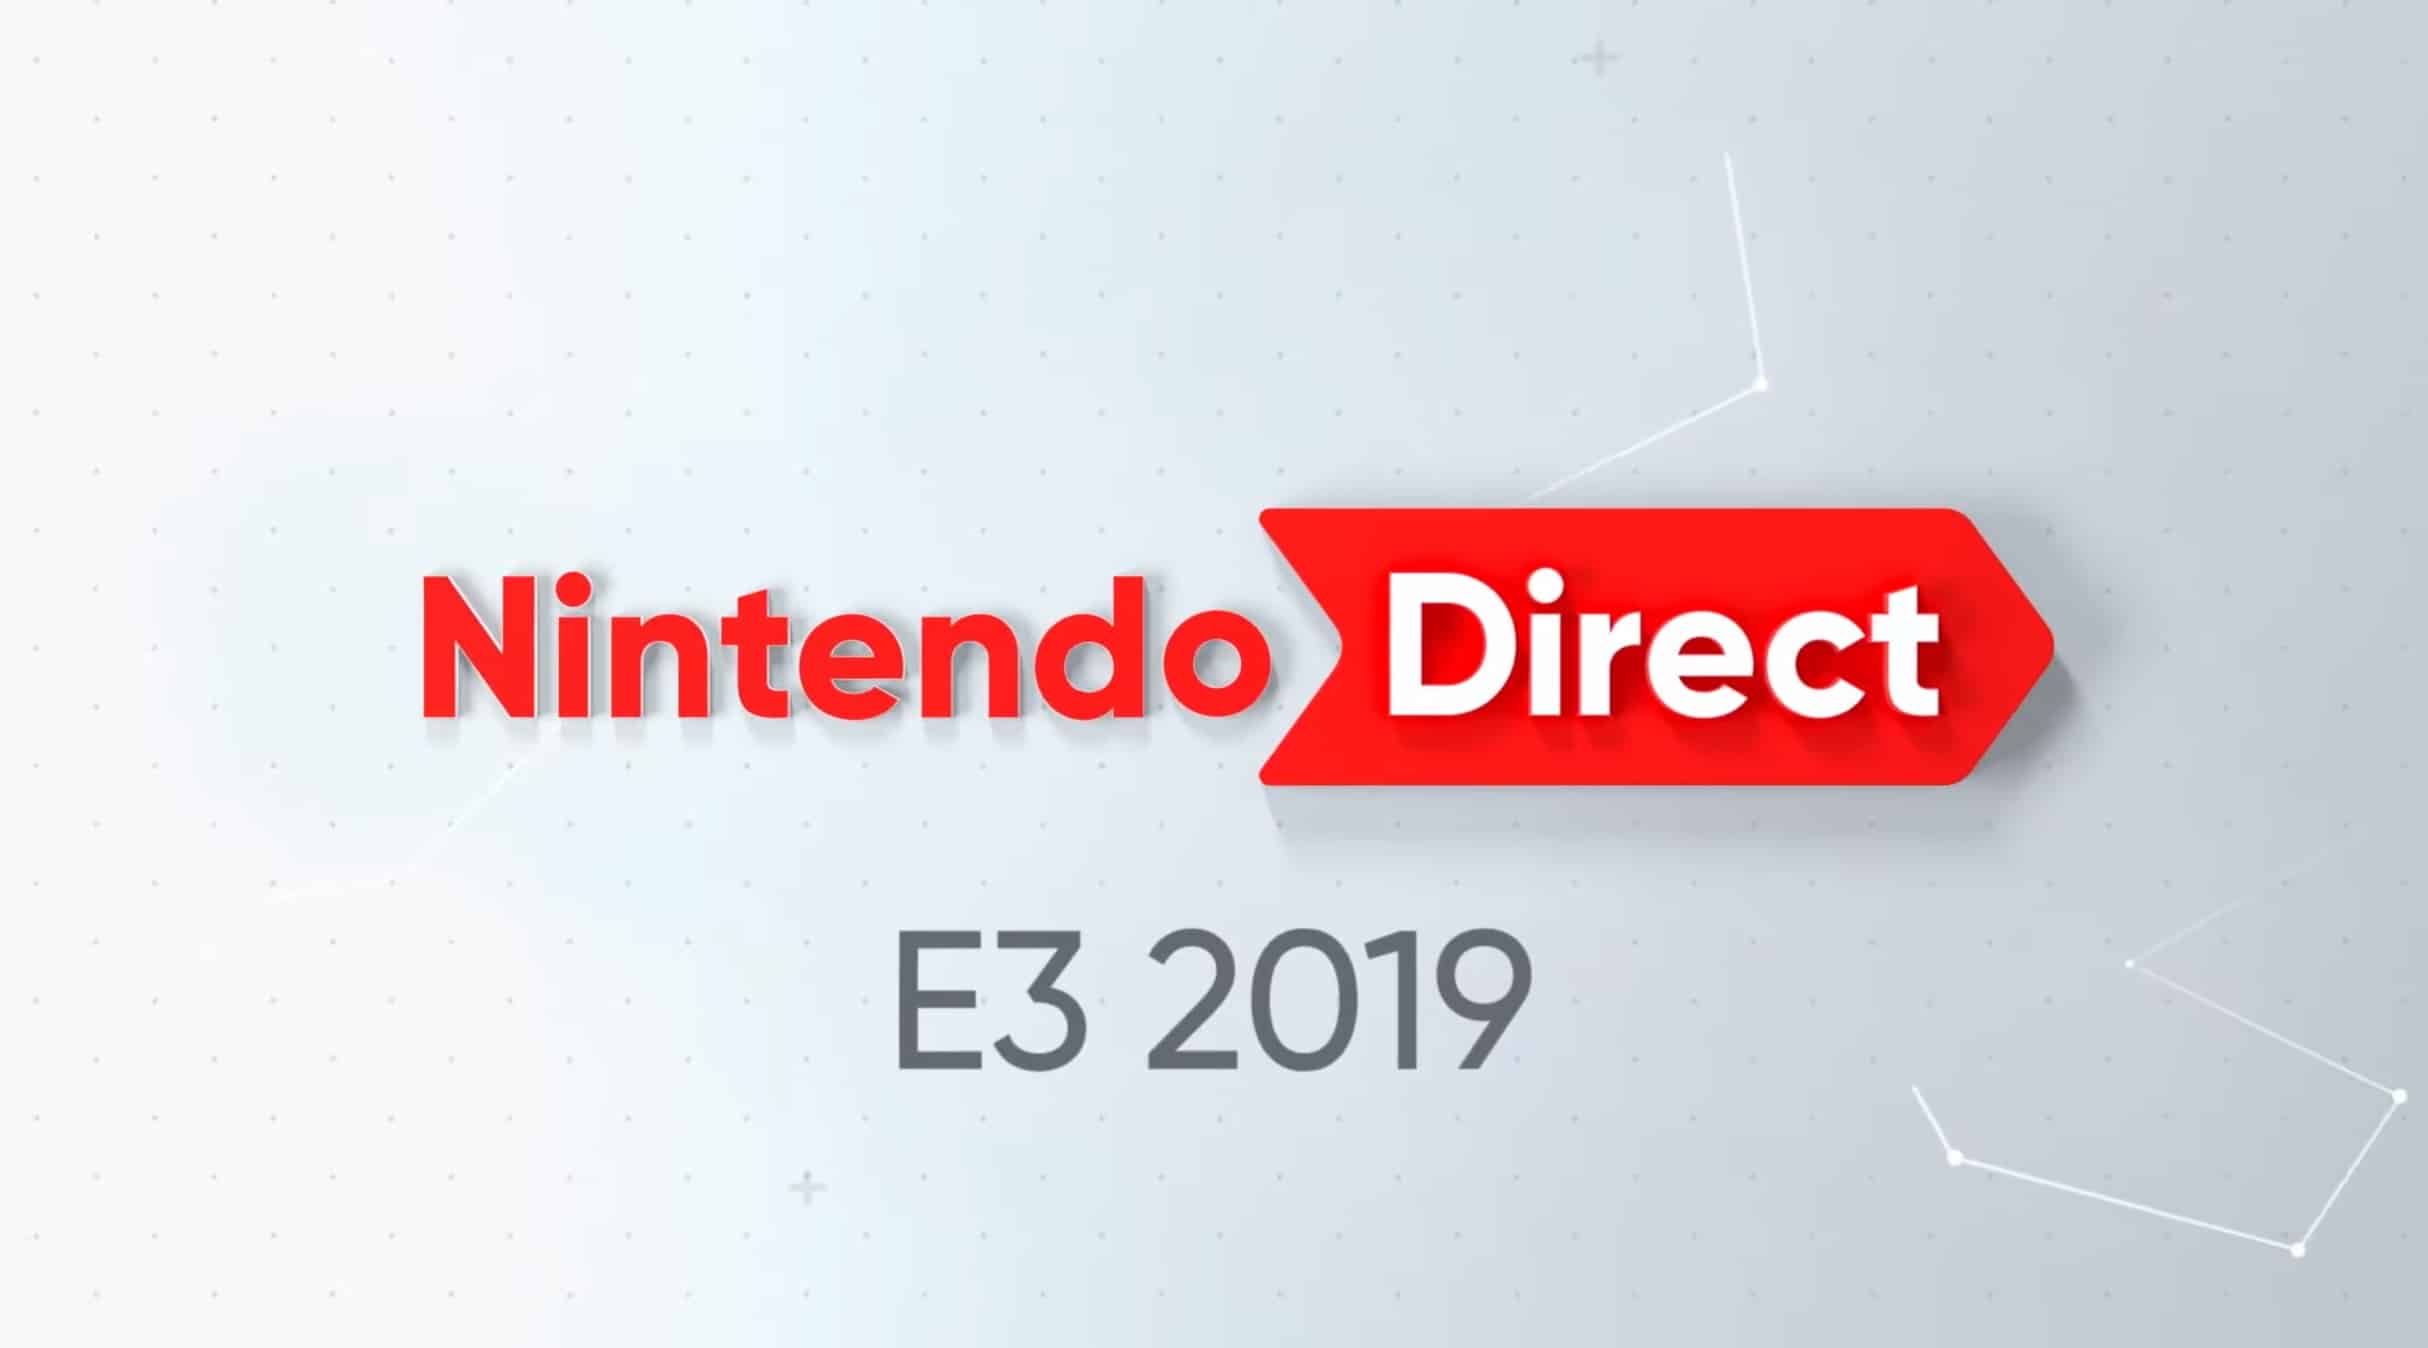 Nintendo Direct Panel E3 2019 header